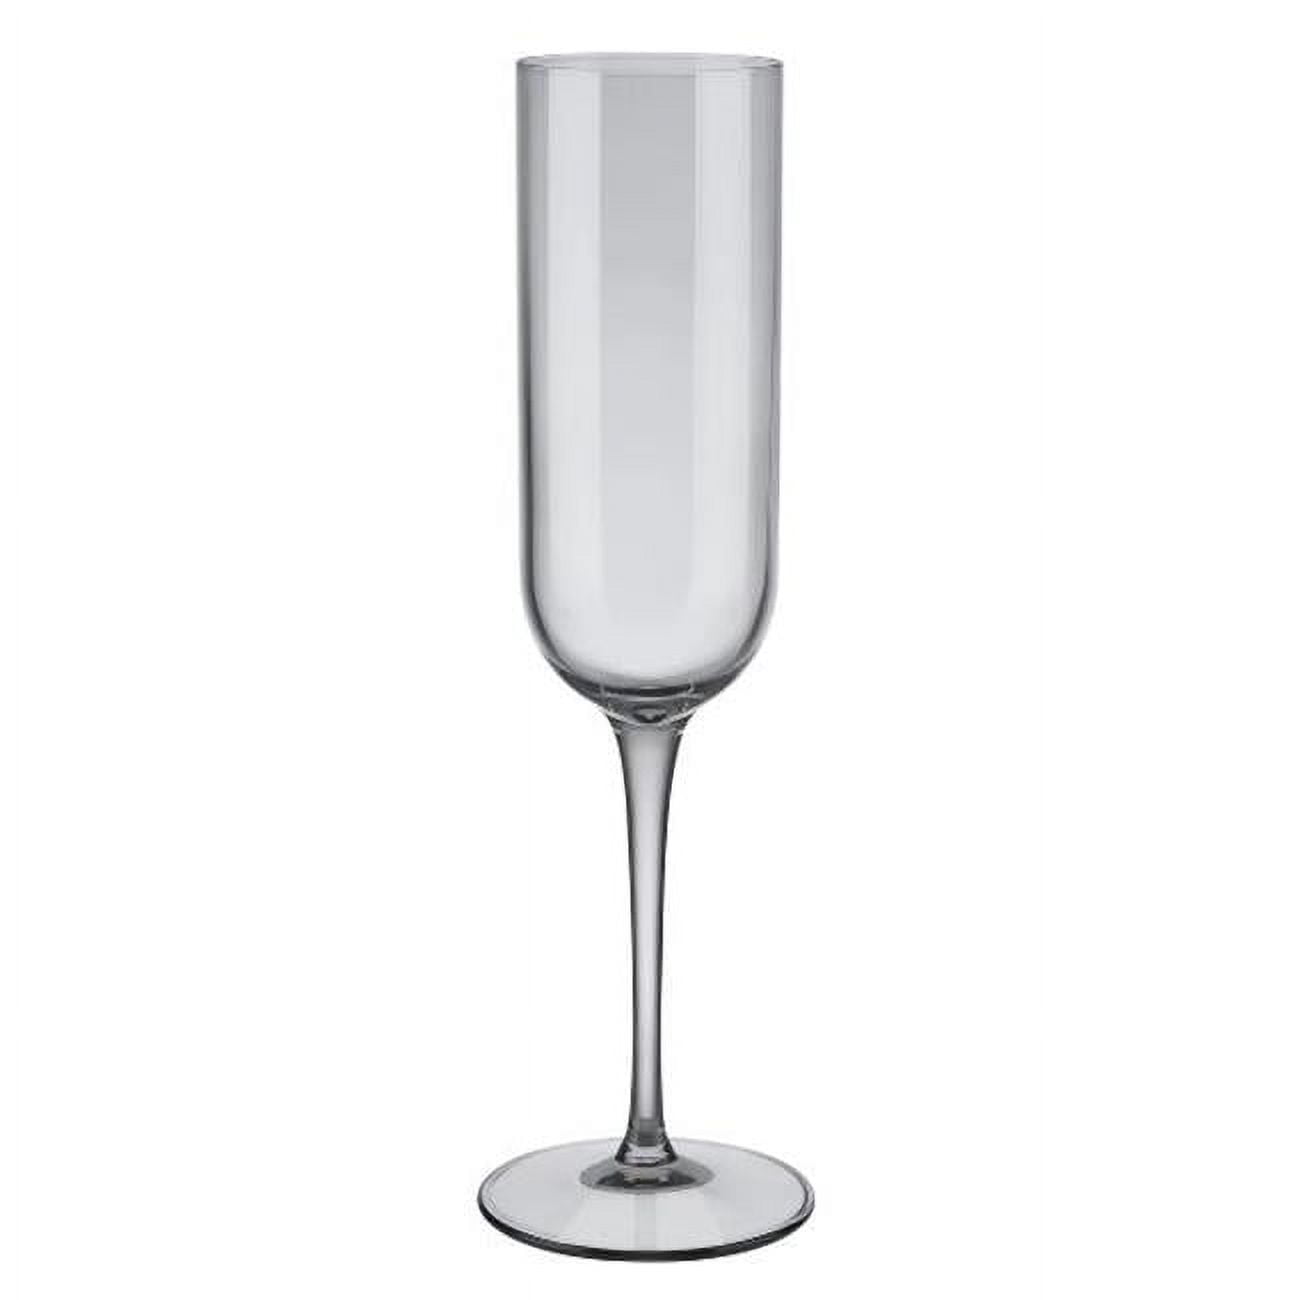 Picture of Blomus 63932 7 oz Fuum Champagne Flute Glasses, Smoke